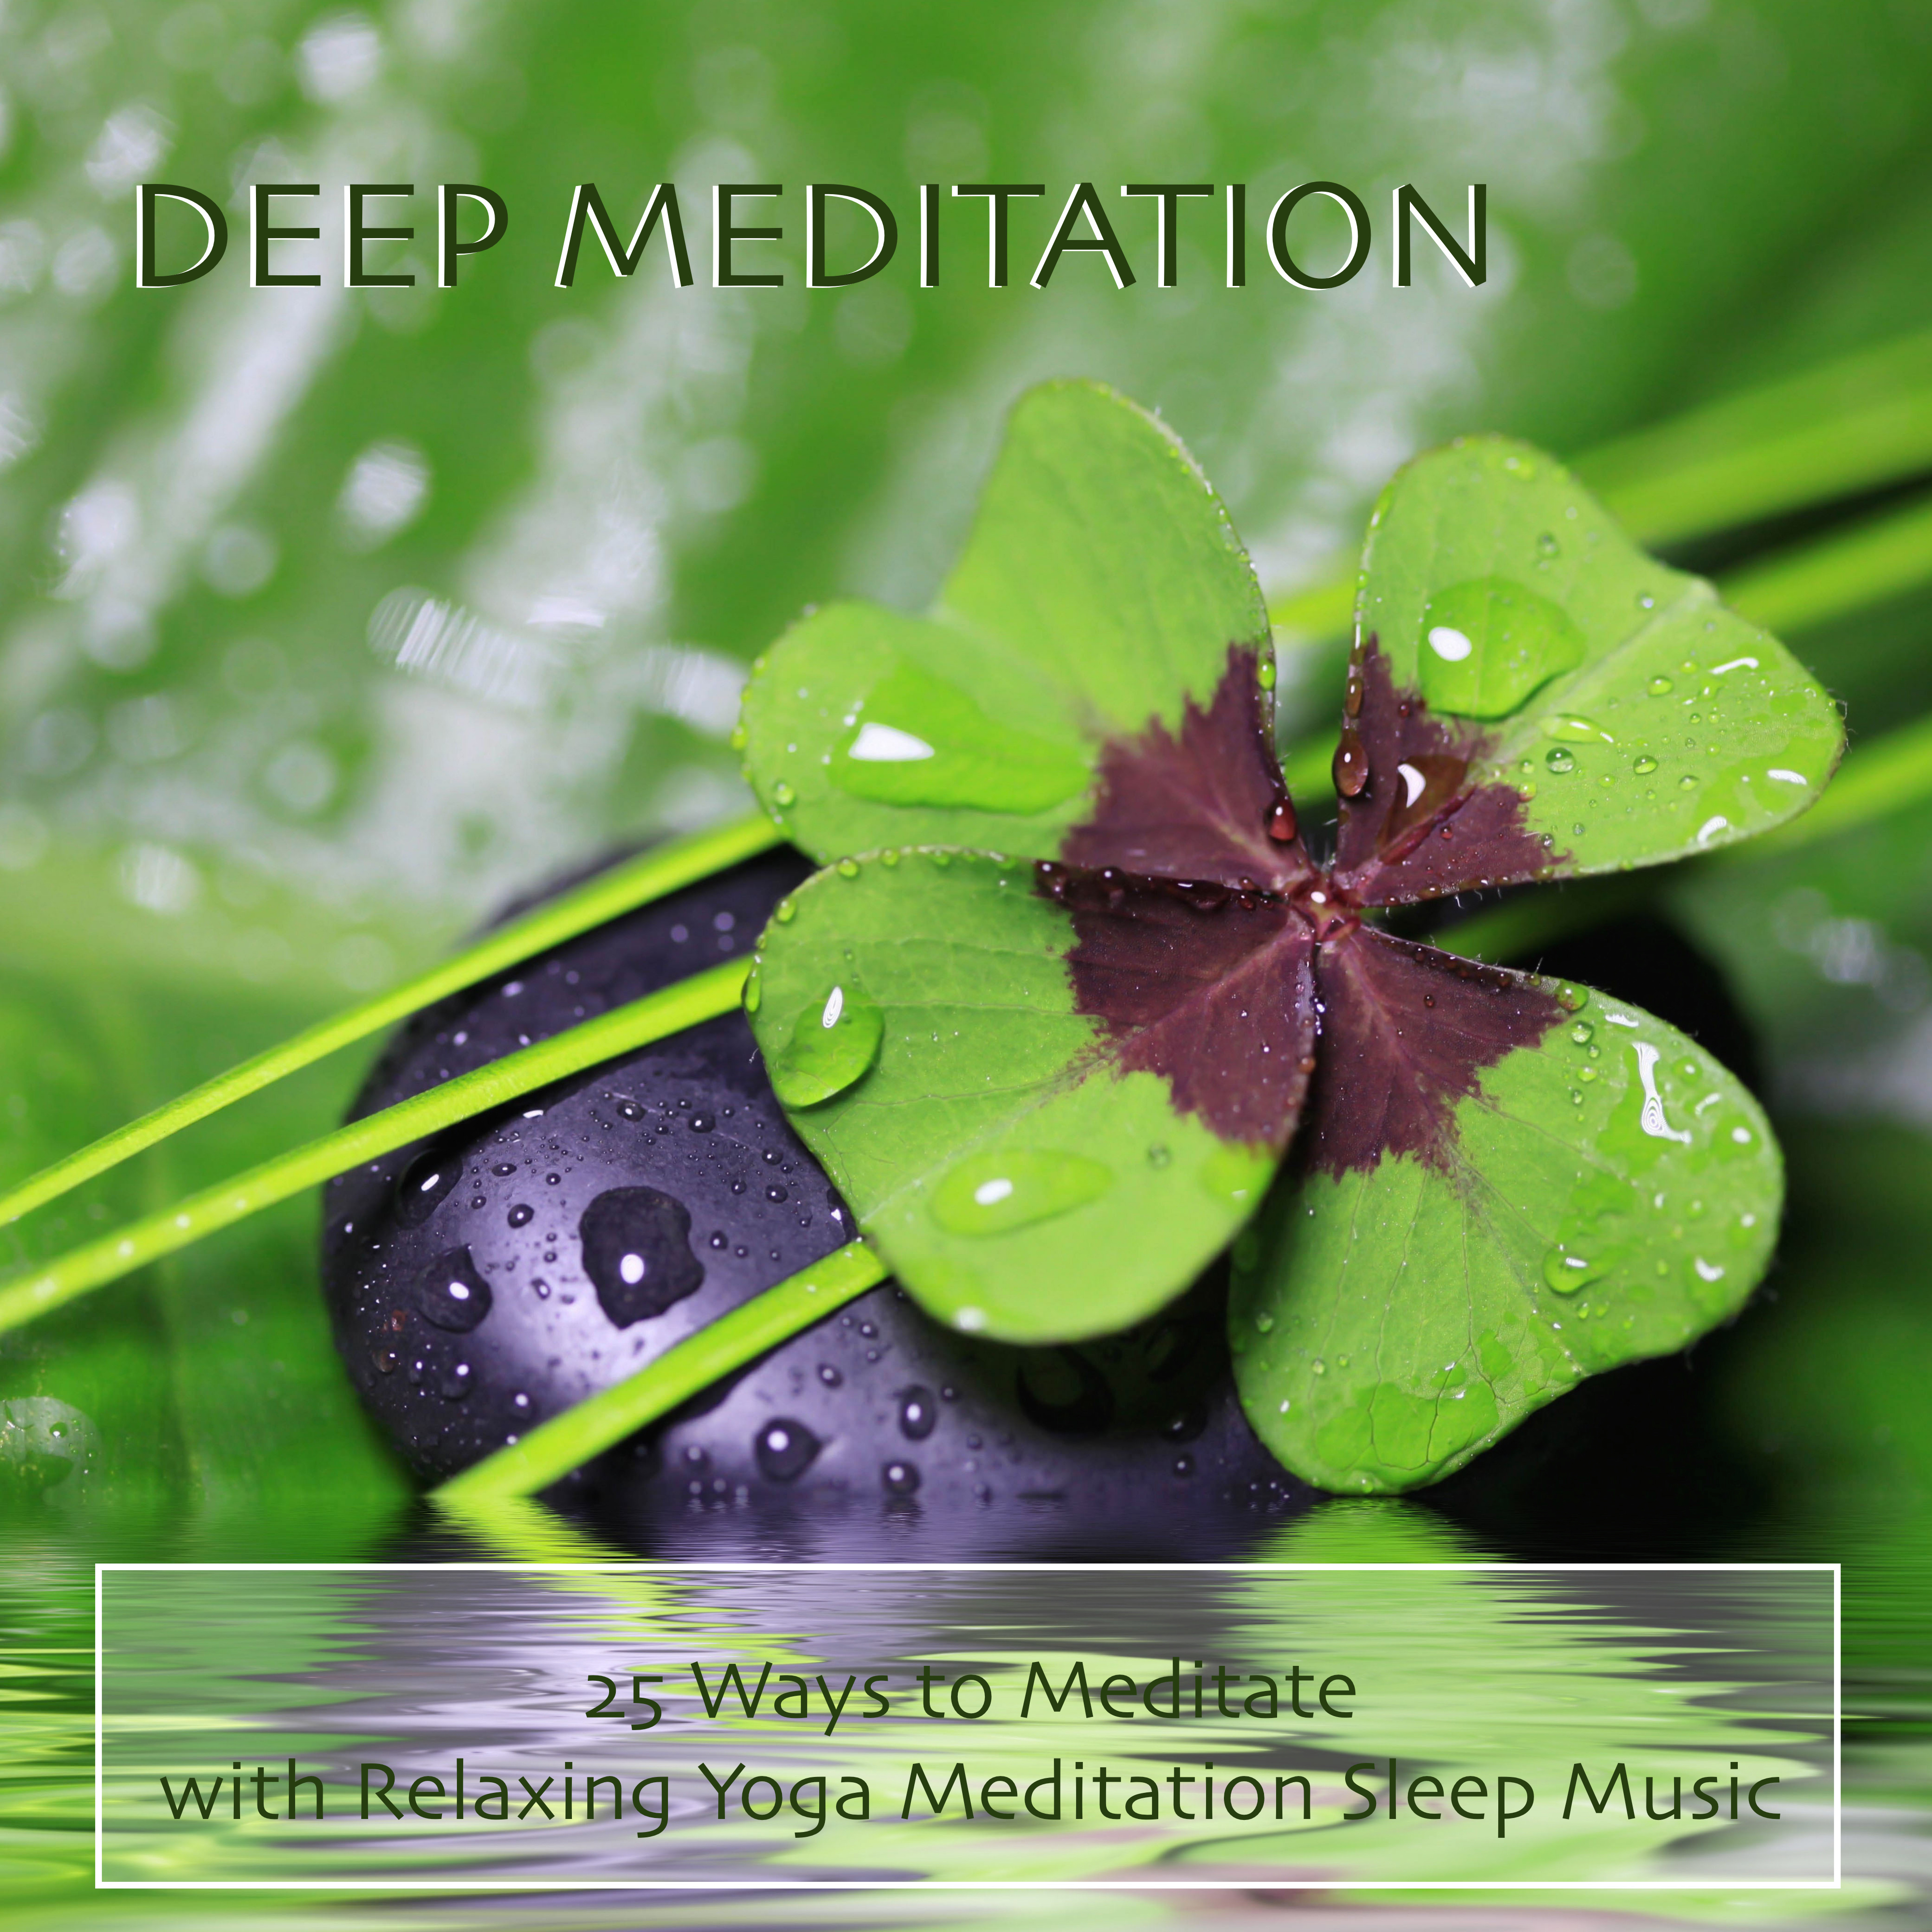 Deep Meditation - 25 Ways to Meditate with Relaxing Yoga Meditation Sleep Music